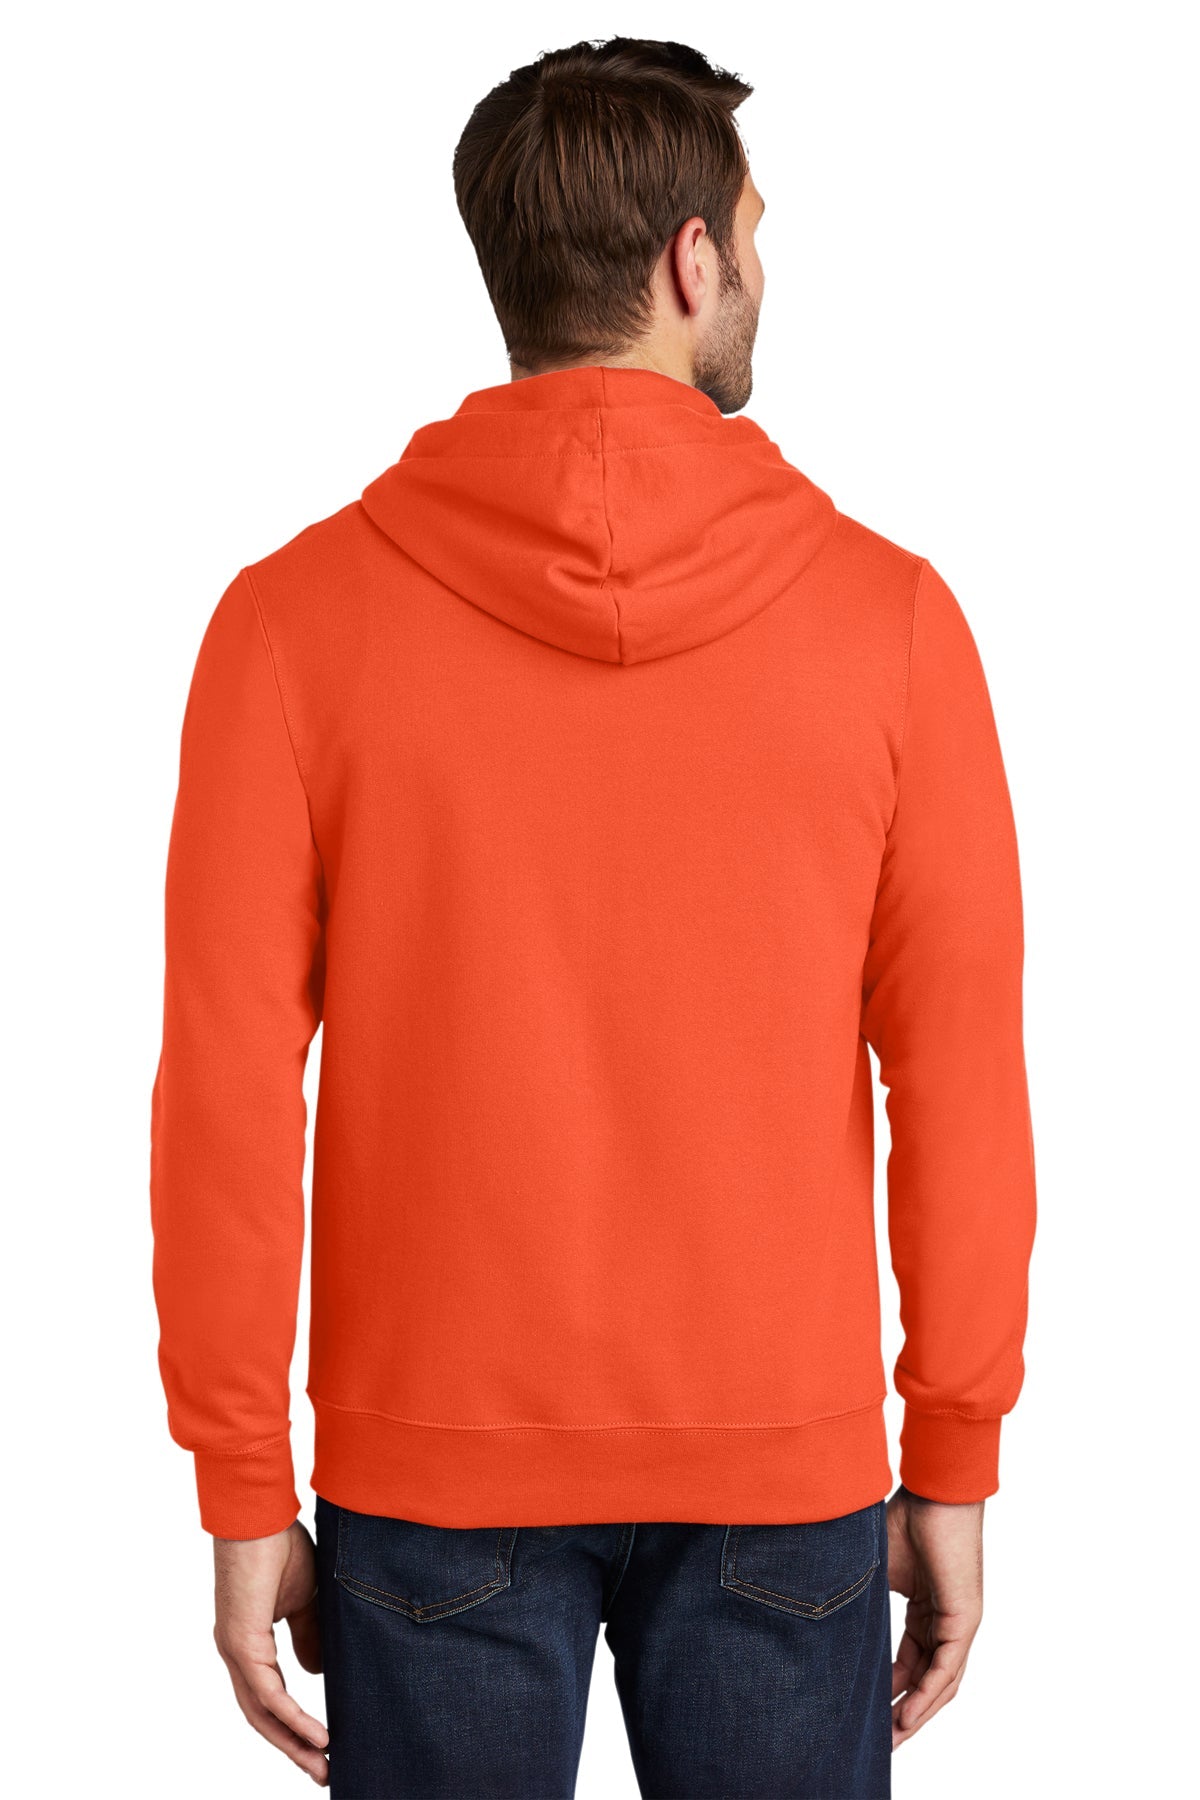 port & company_pc850zh _orange_company_logo_sweatshirts